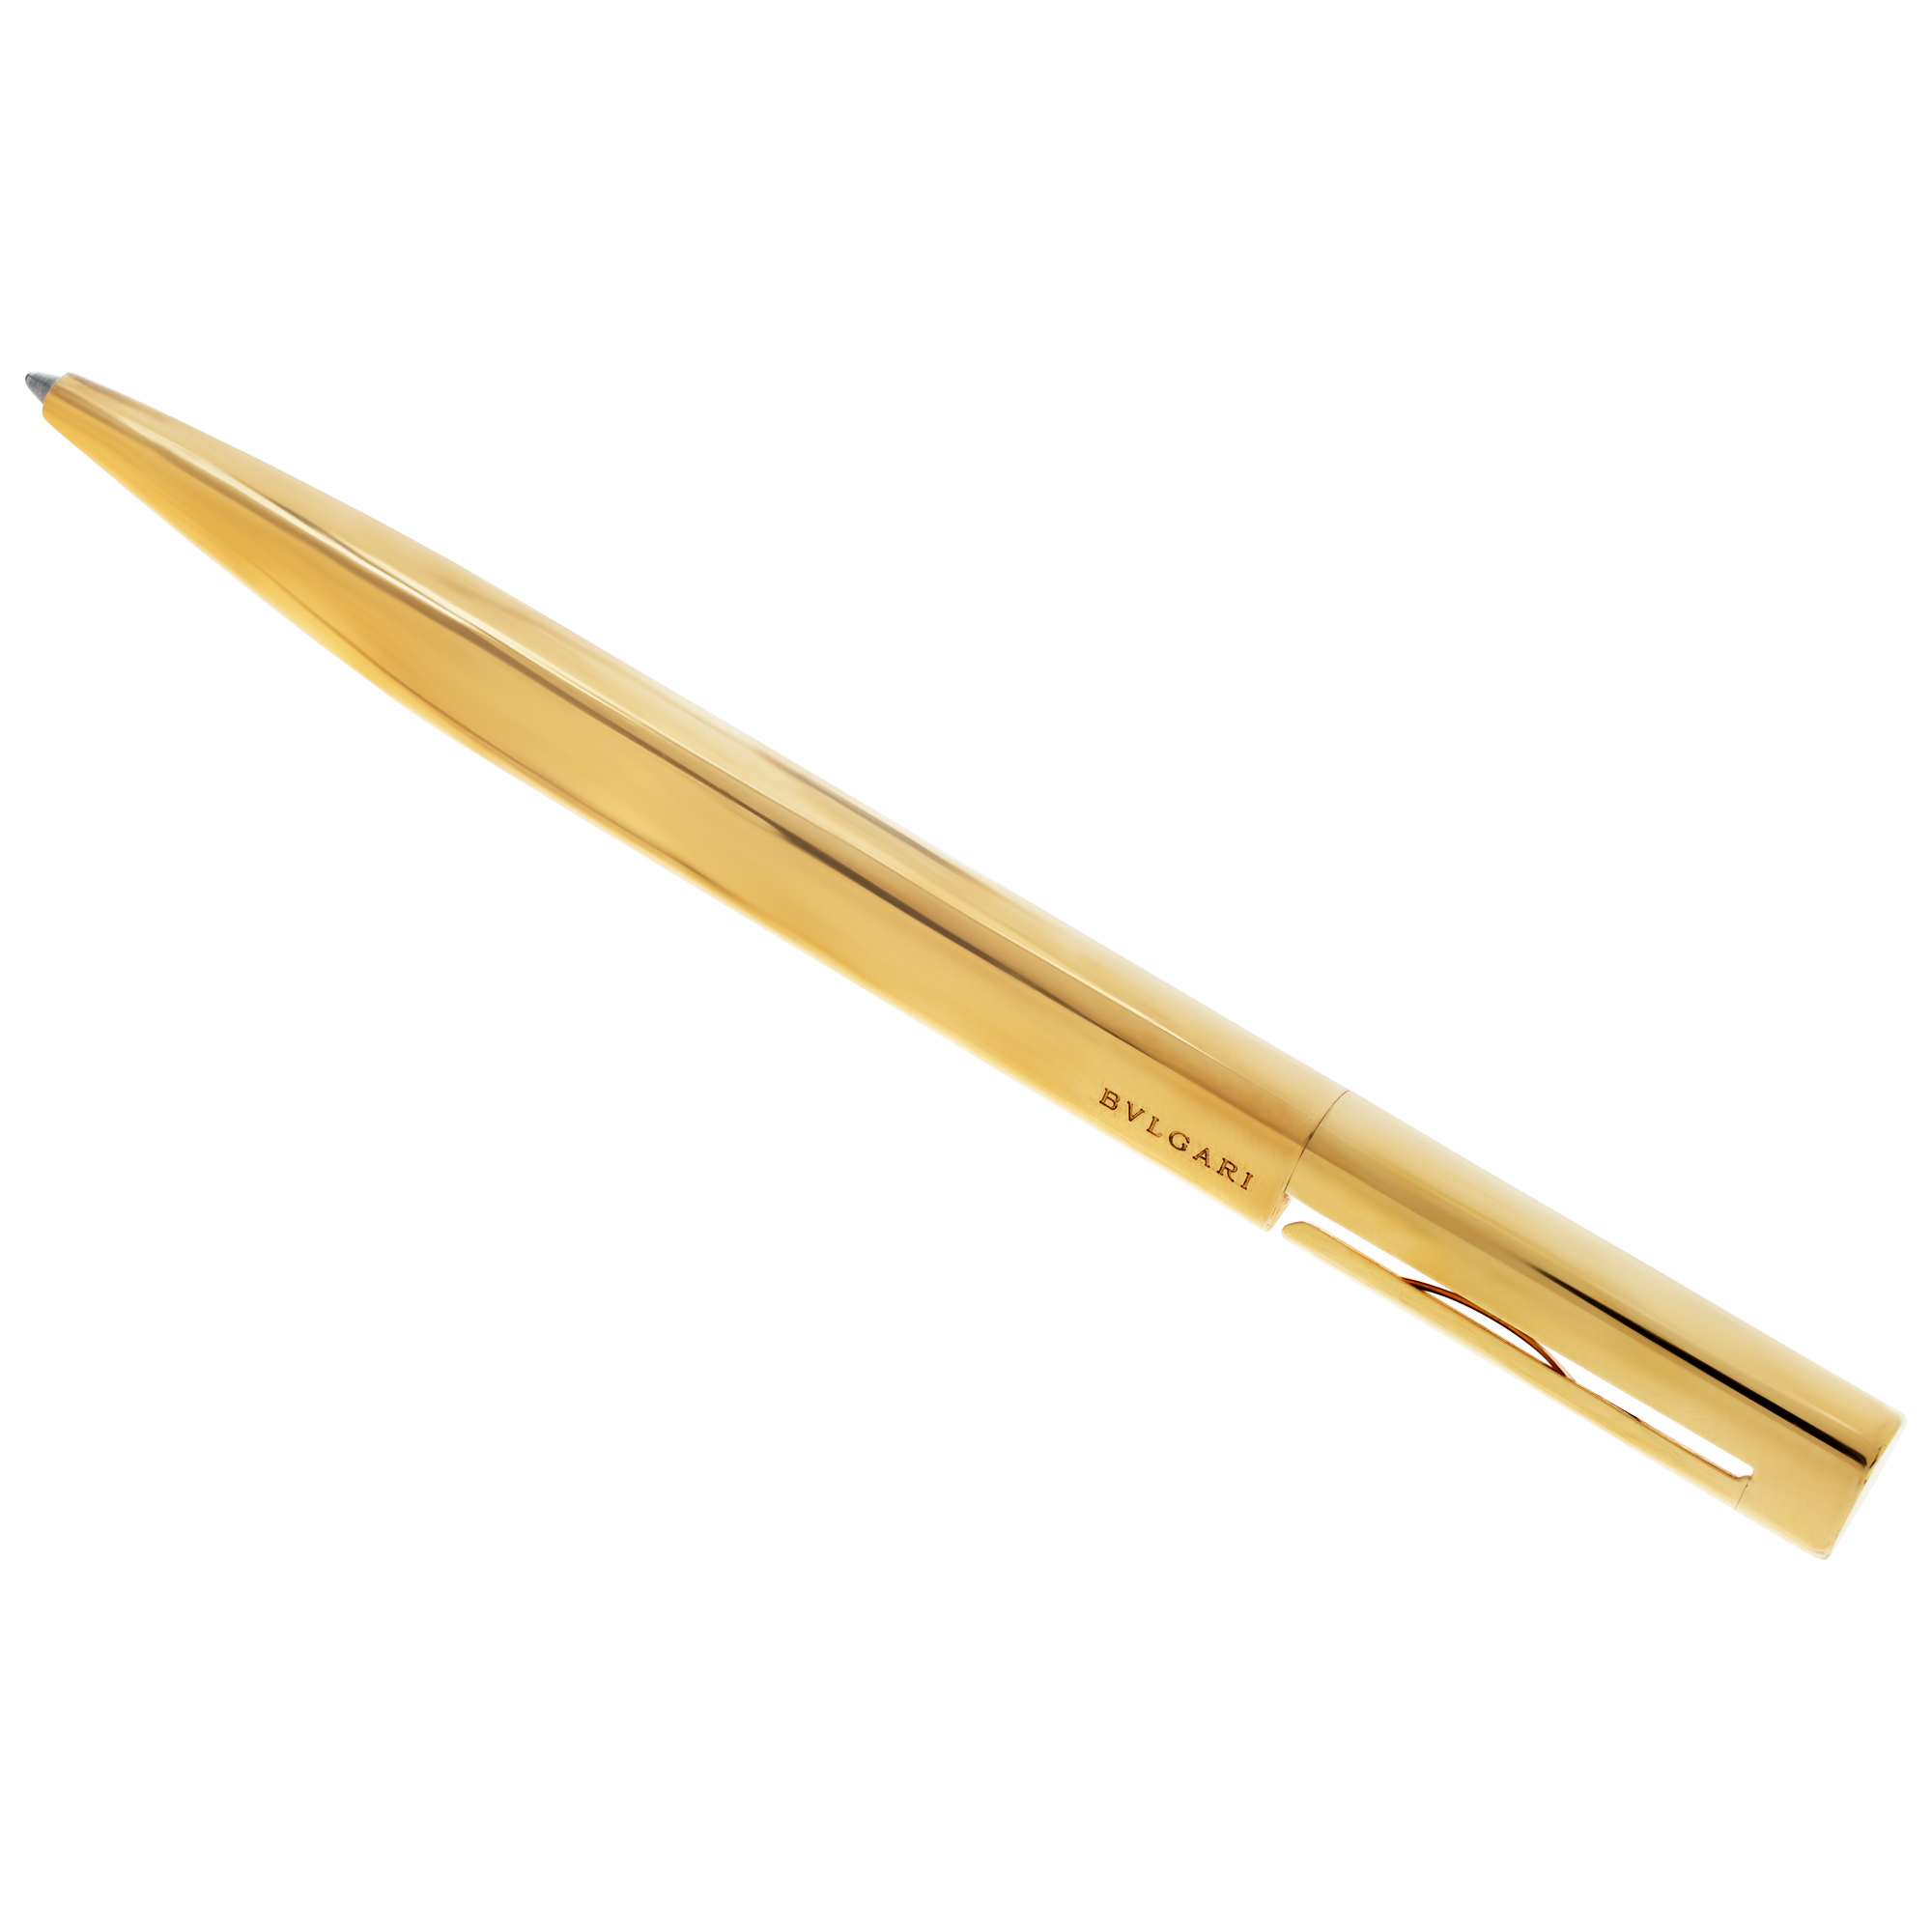 FREE SHIPPING WORLDWIDE Bvlgari BVLGARI ECCENTRIC Gold Plated Ballpoint Pen used 